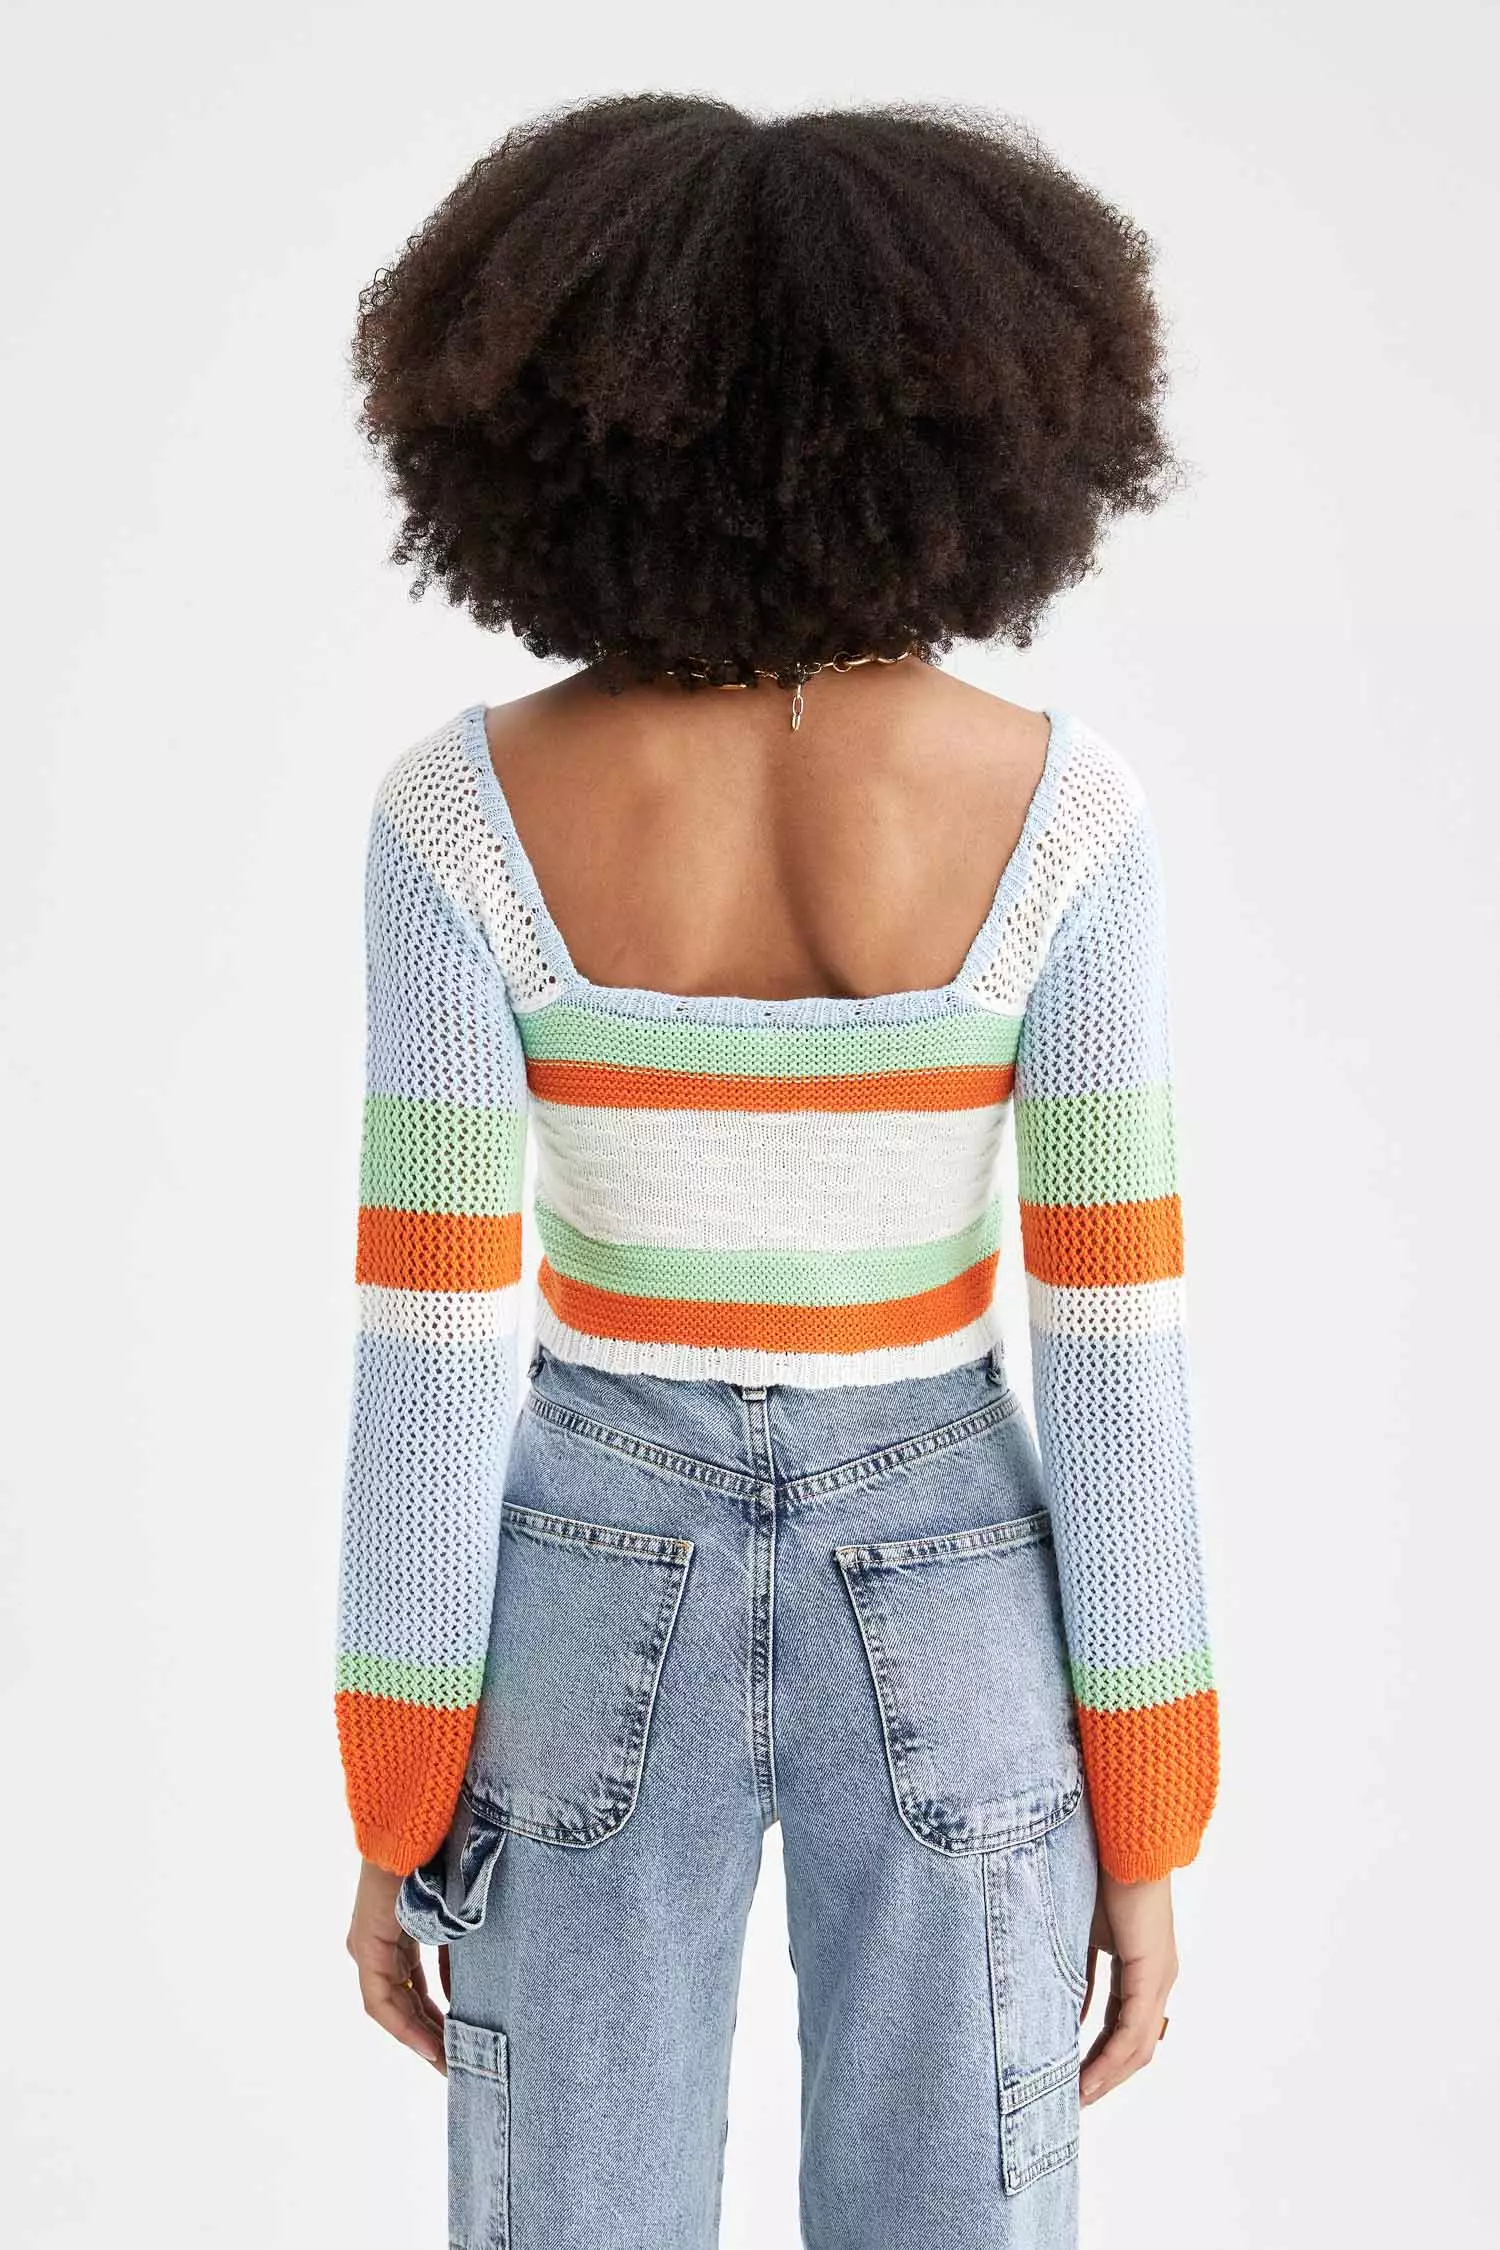 Slim Fit Square Collar Color Block Crochet Knitwear Sweater